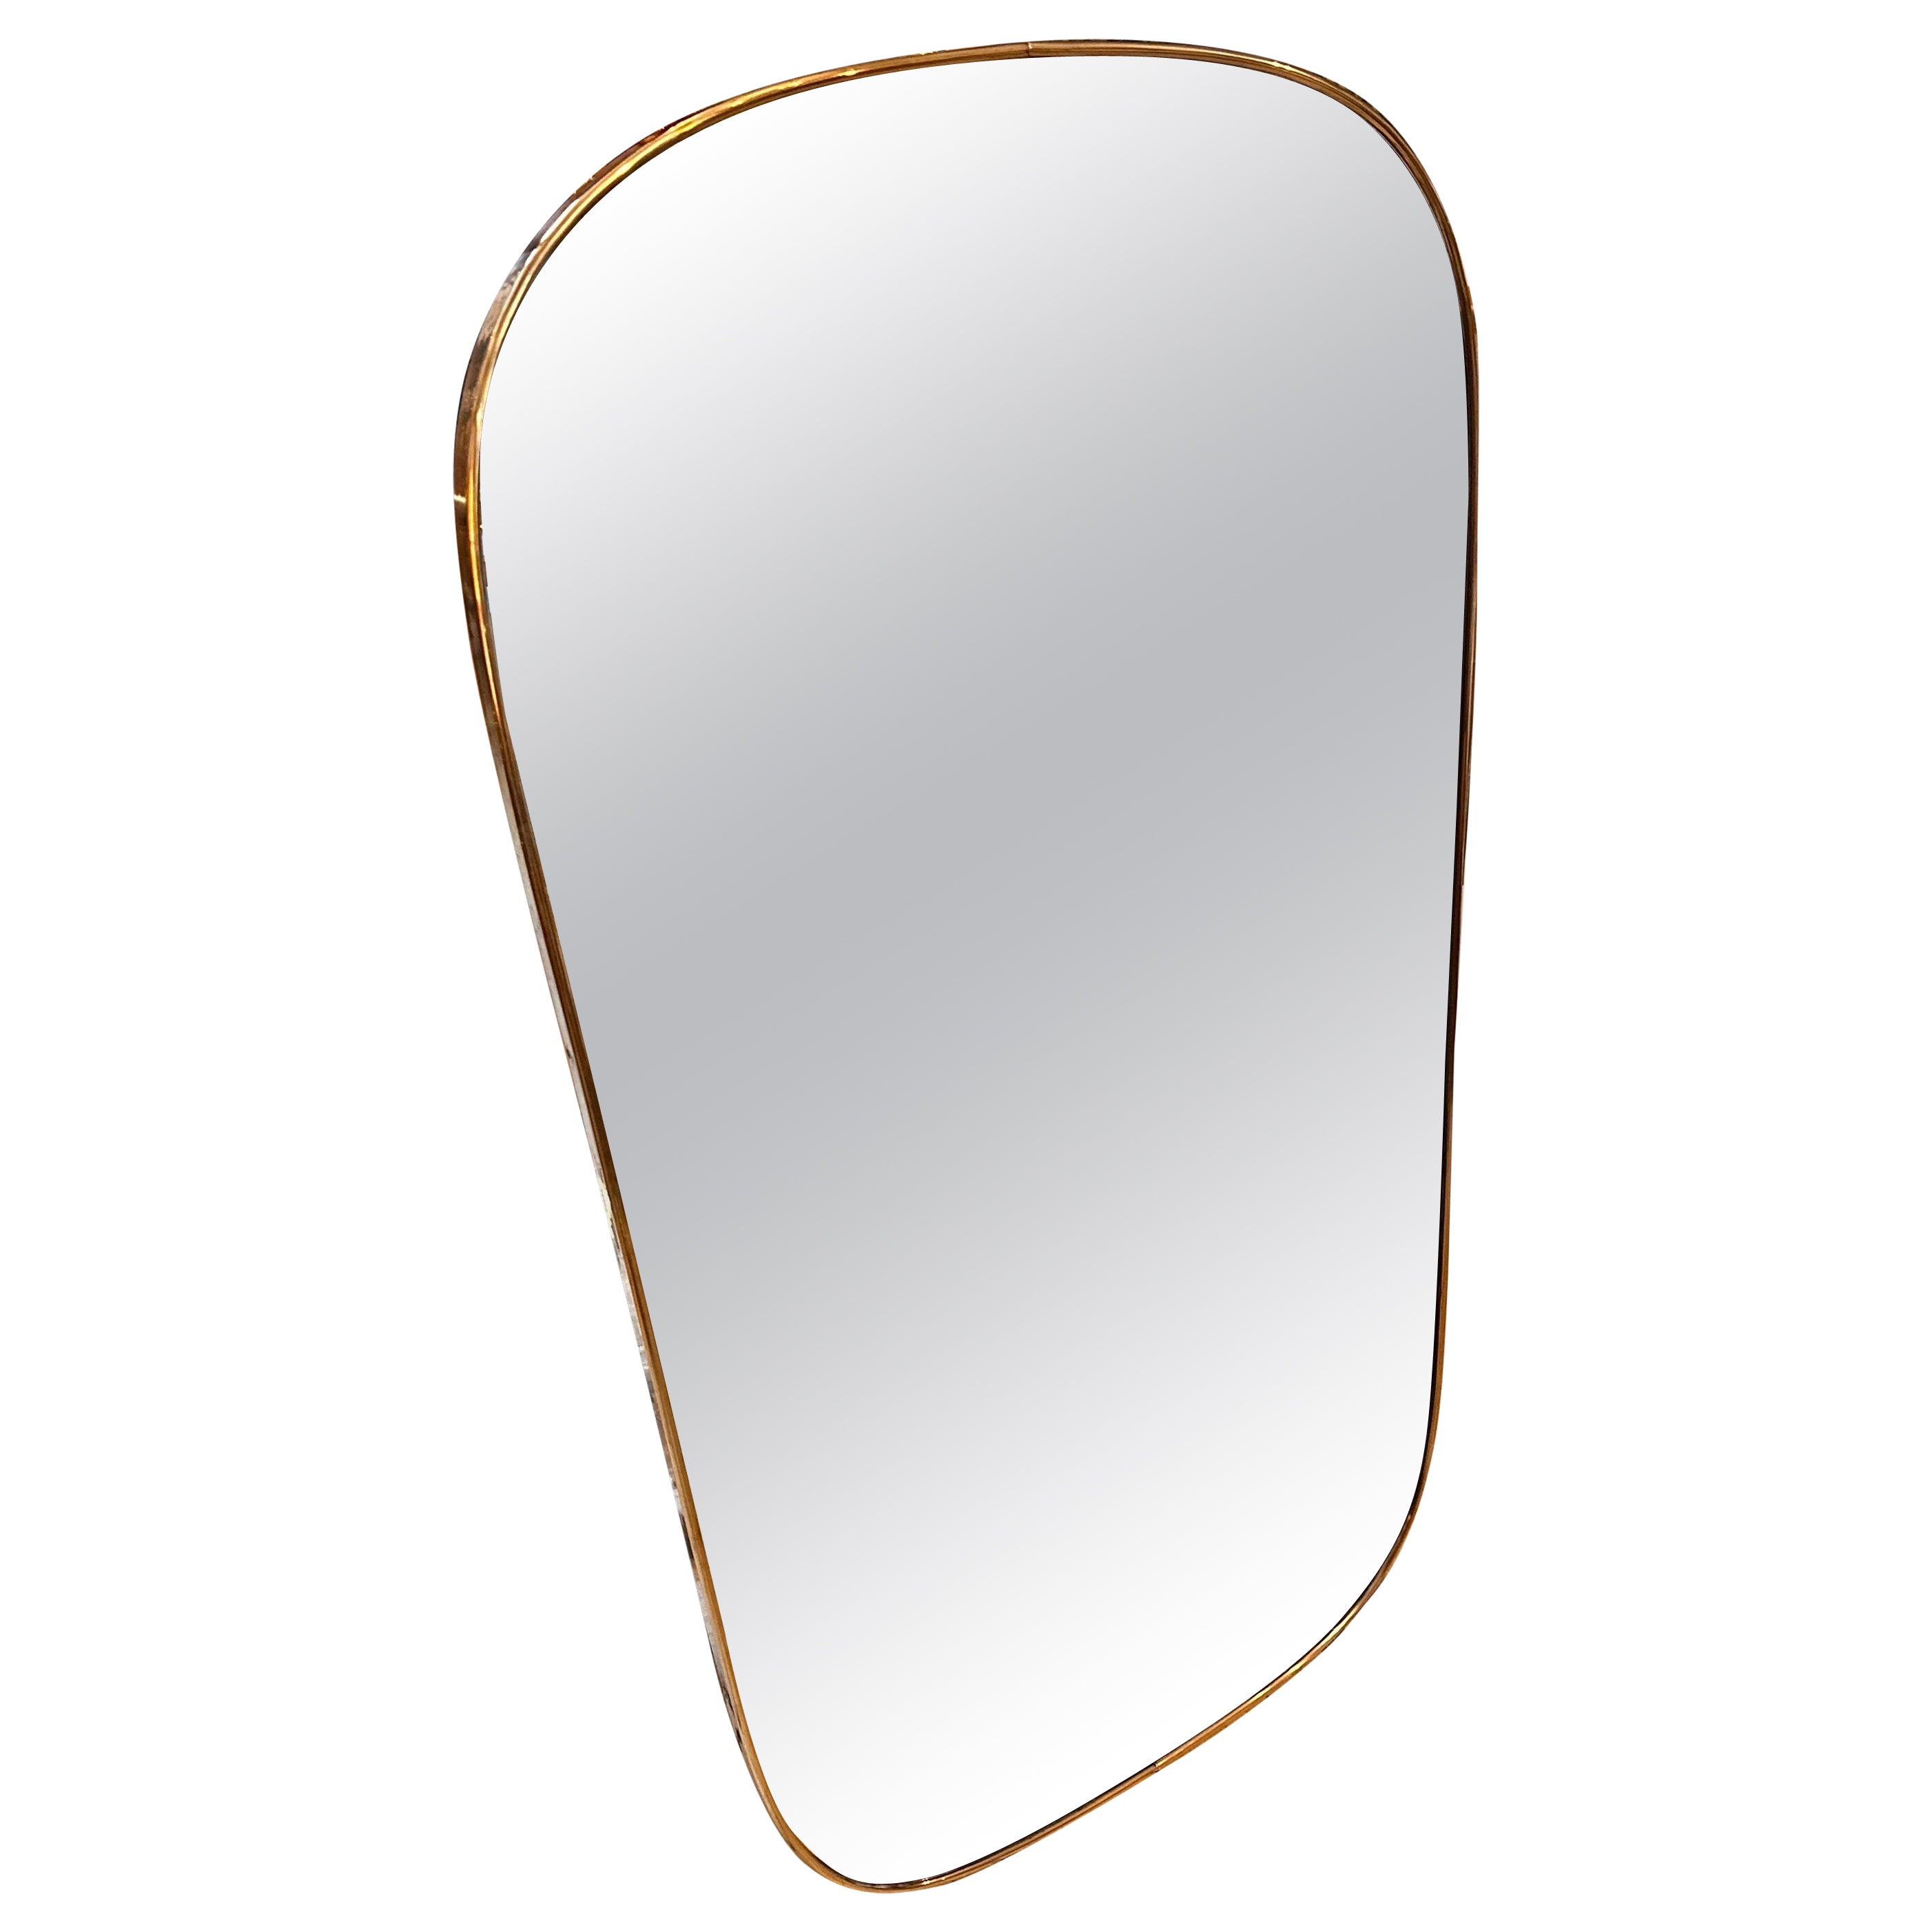 1950s Gio Ponti style Mid-Century Modern Brass Big Italian Oval Wall Mirror